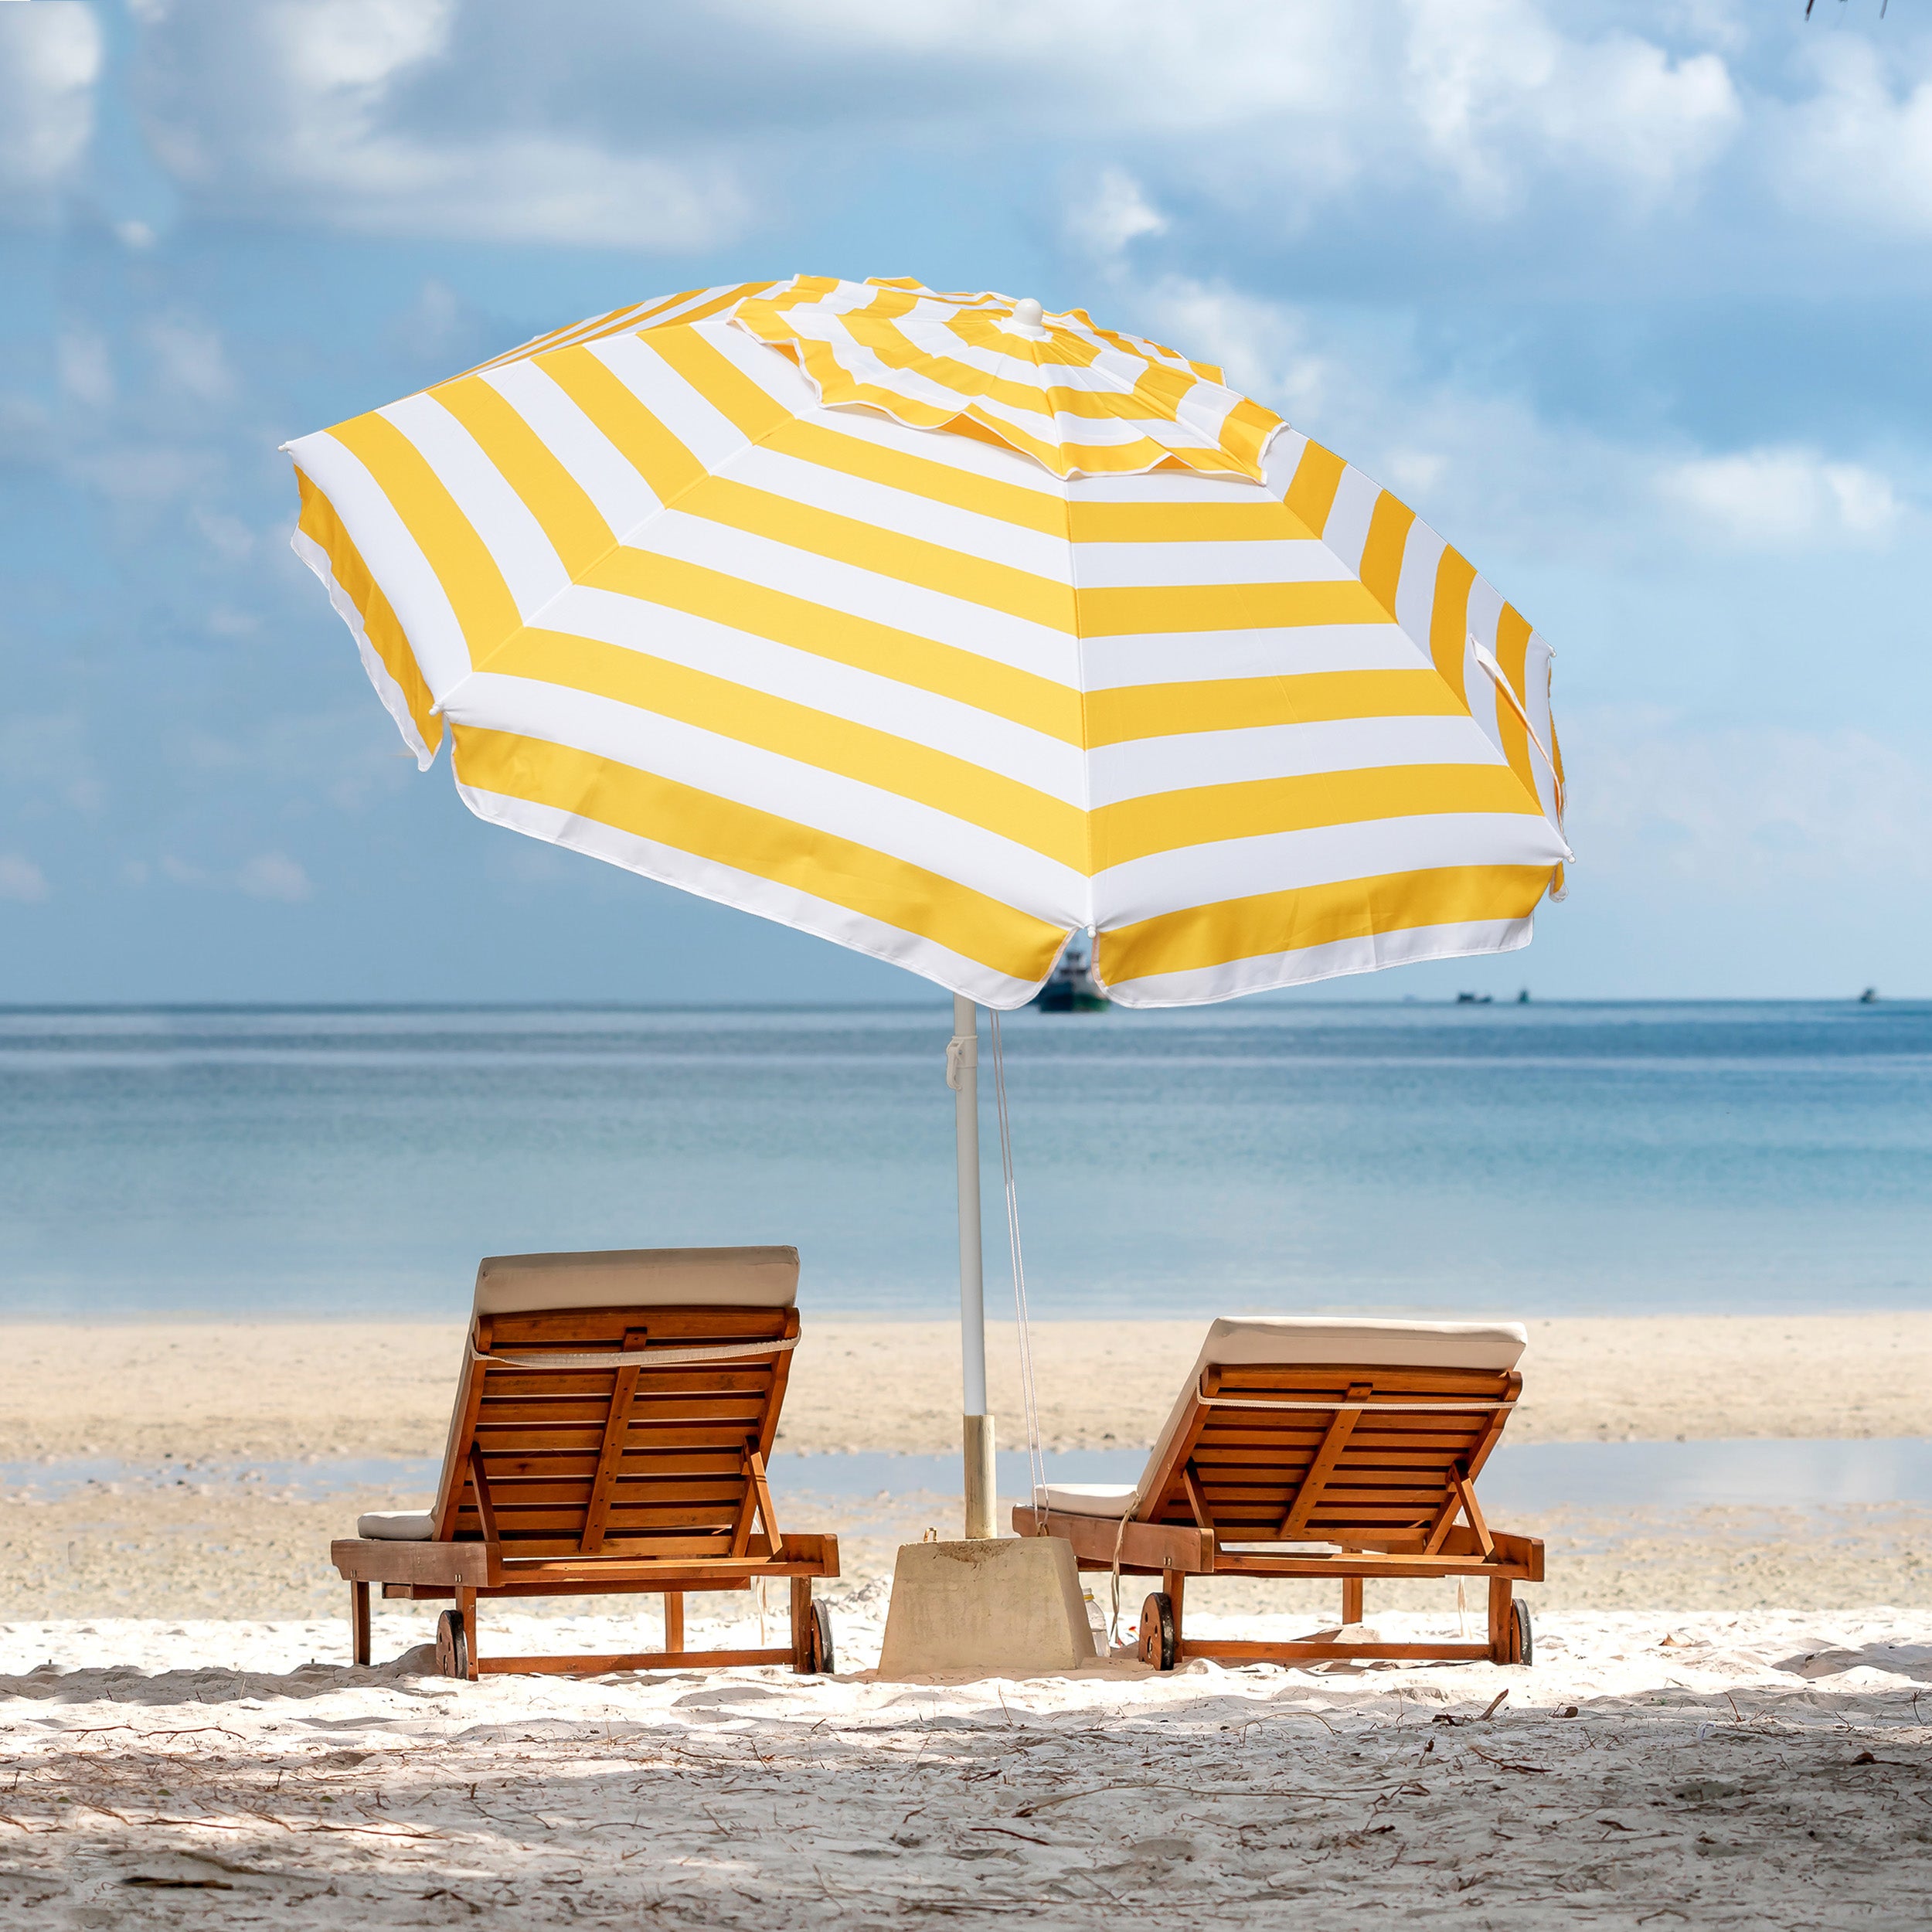 AMMSUN 6.5ft Outdoor Beach Umbrella Yellow stripe